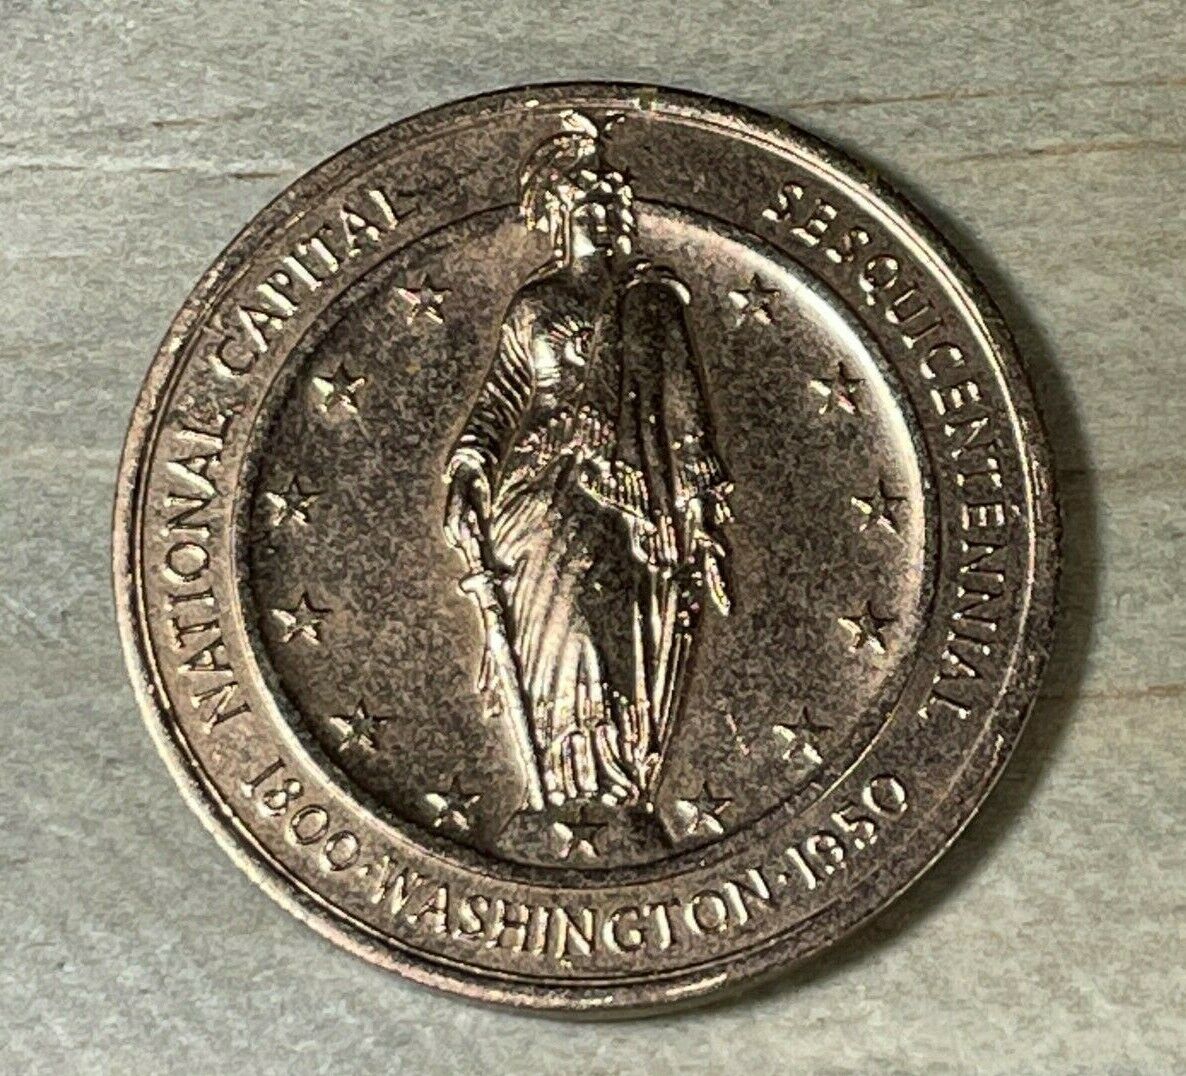 Washington Commemorative Coin 1800-1950 National Capital Medal Copper/Bronze